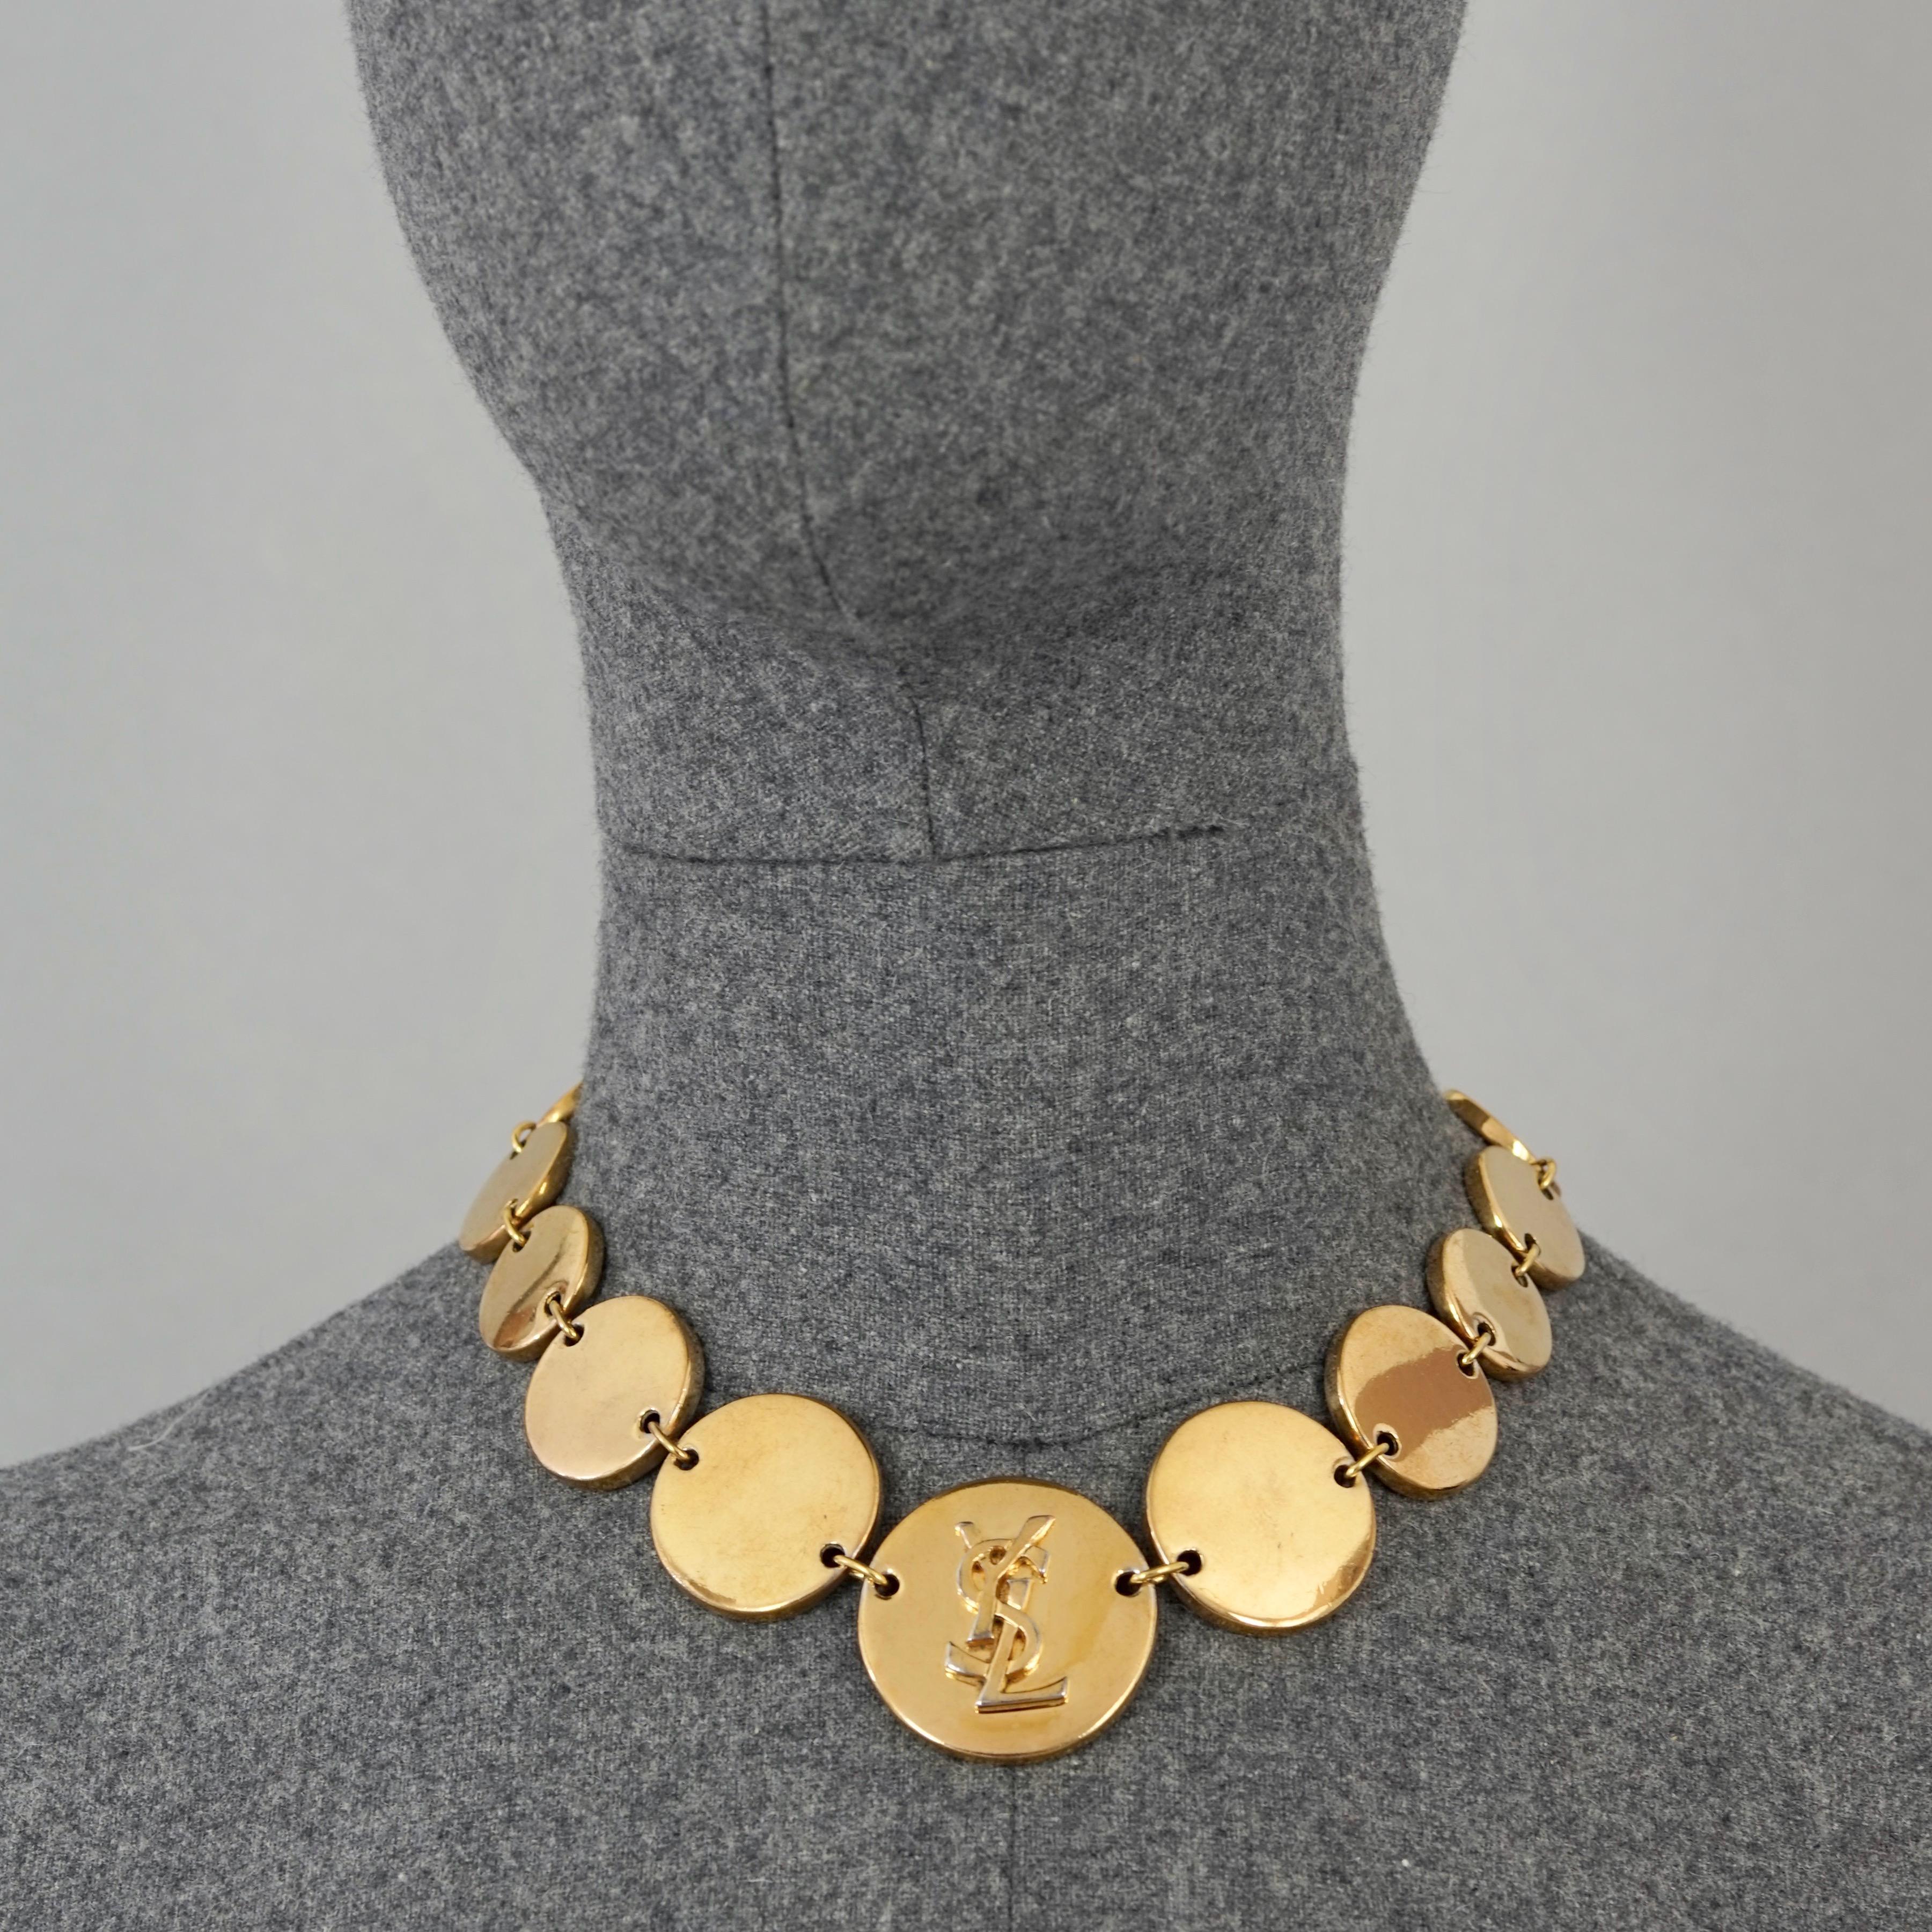 Vintage YVES SAINT LAURENT Ysl Logo Medalion Link Necklace

Measurements:
Height: 1.42 inches (3.6 cm)
Width: 16.53 inches (42 cm) to 18.50 inches (47 cm)

Features:
- 100% Authentic YVES SAINT LAURENT.
- Disc medallion link necklace with embossed